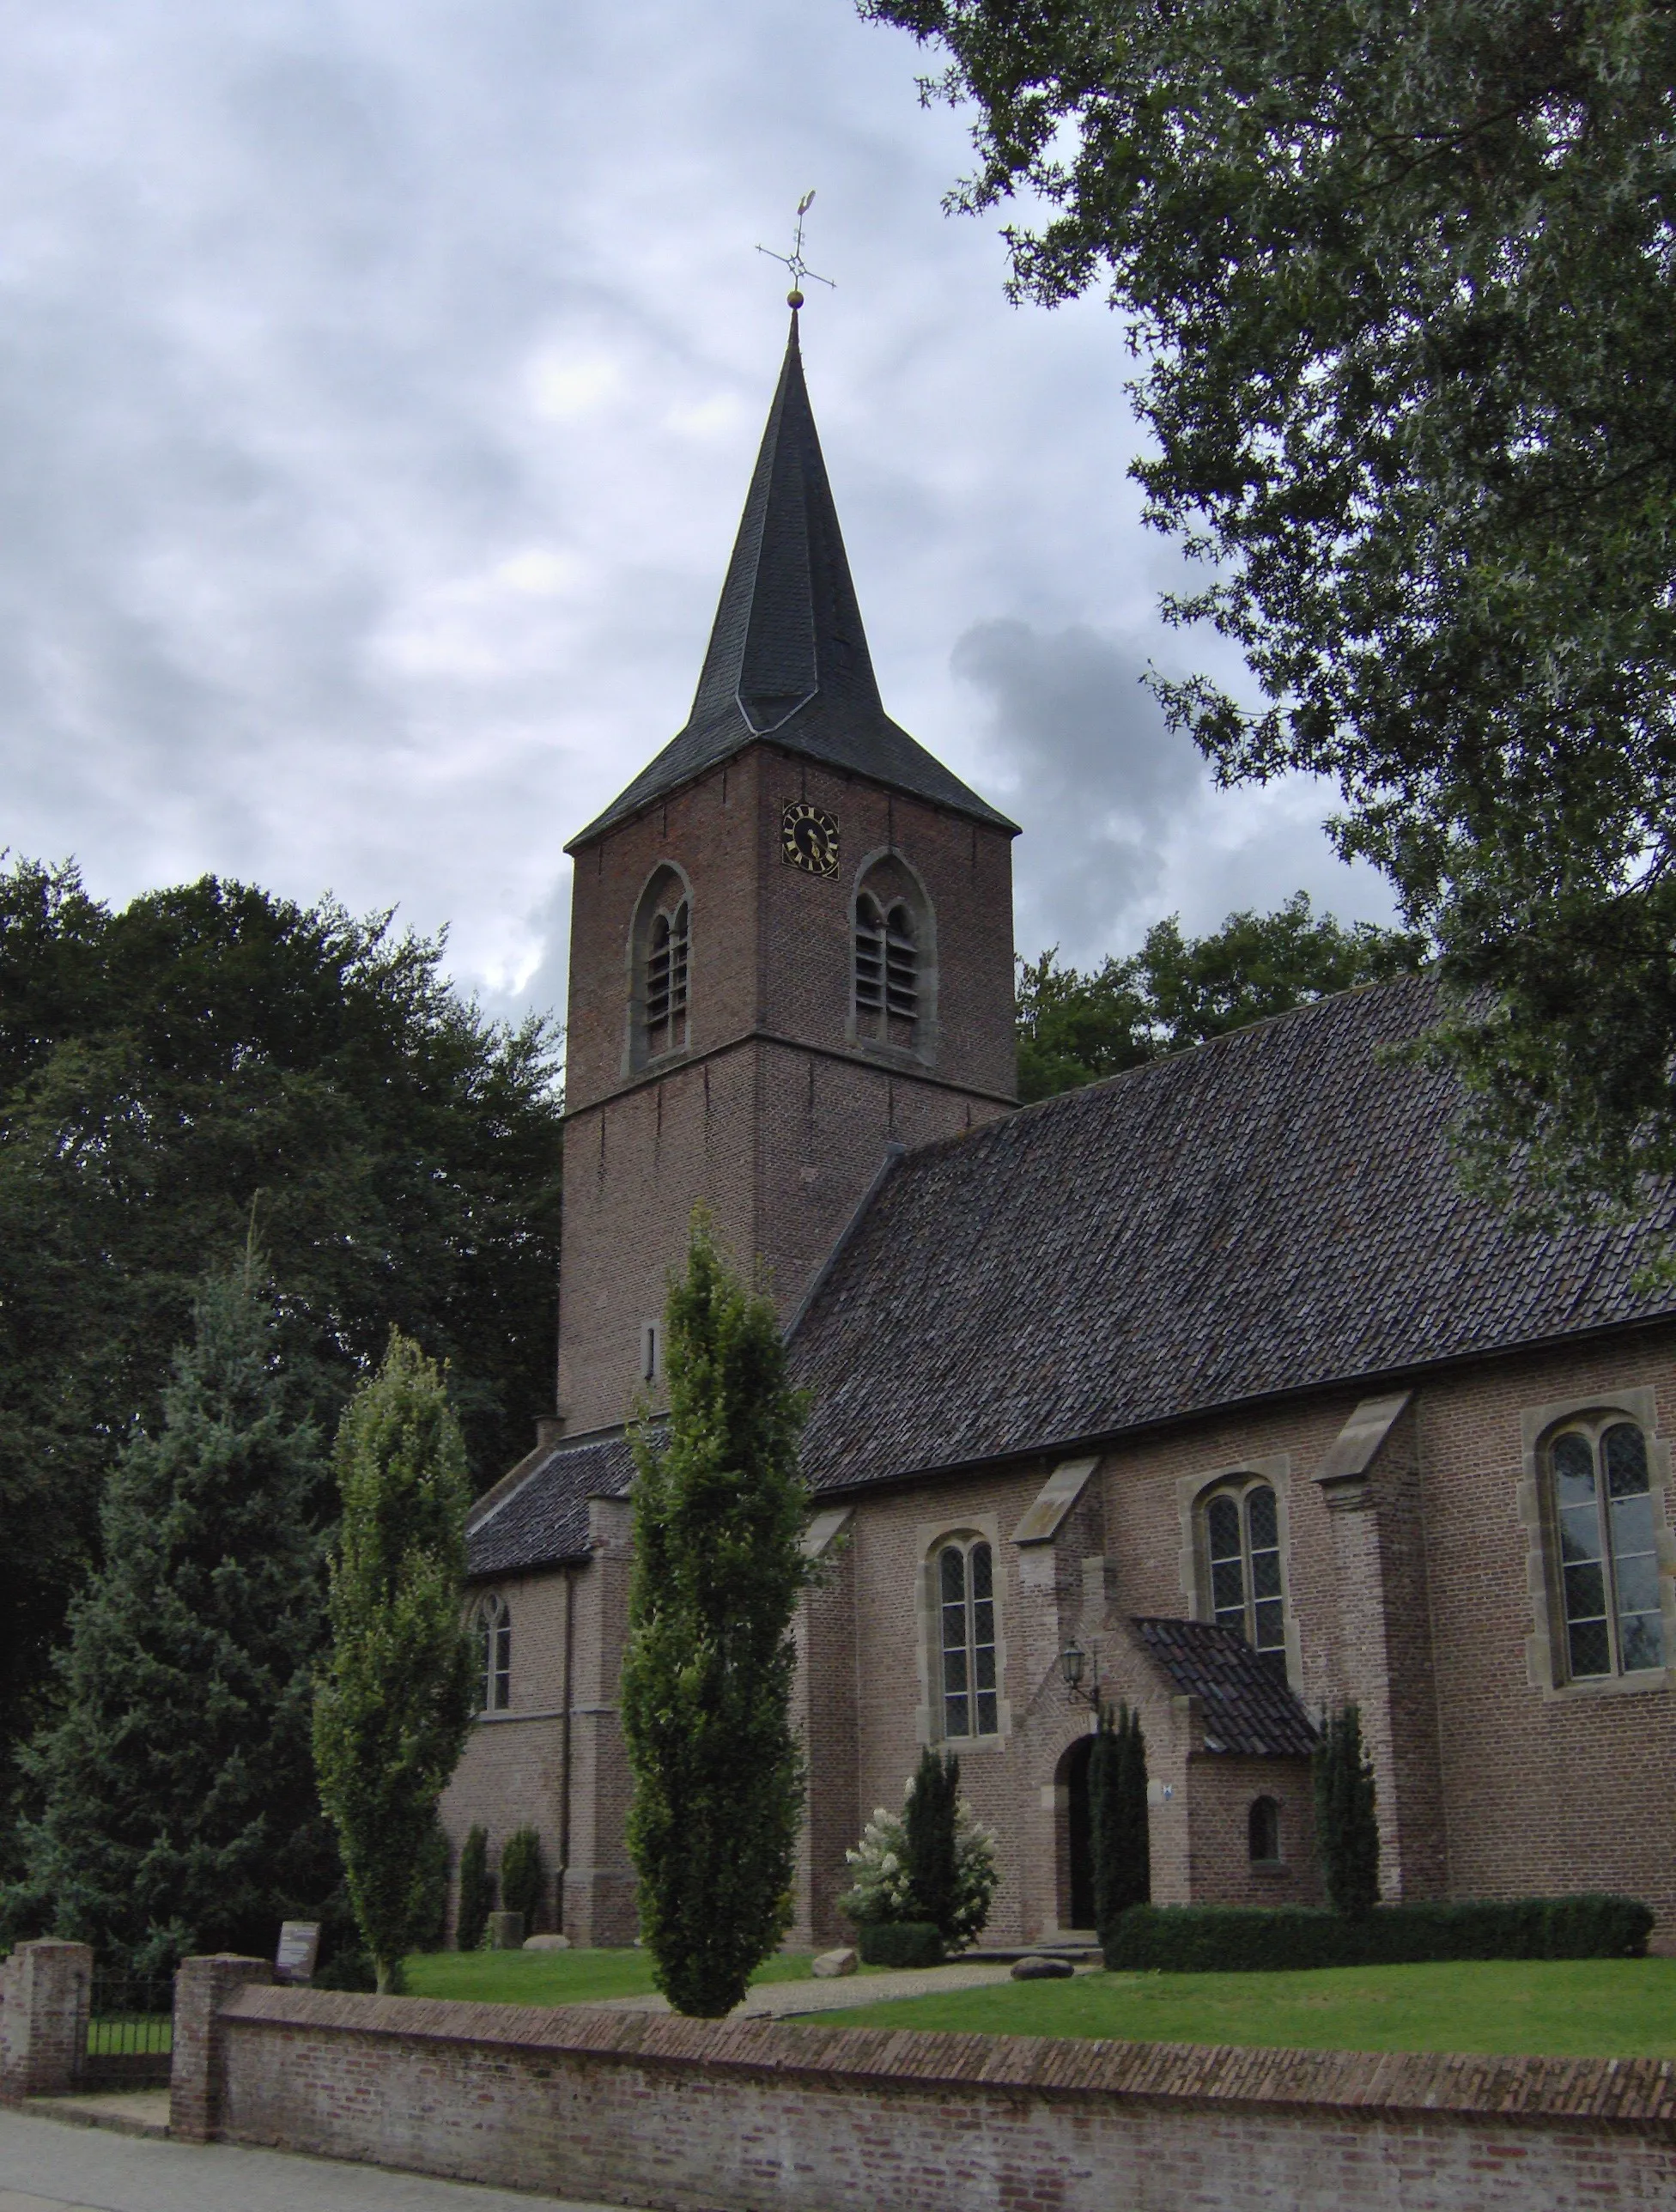 Photo showing: The Johanneskerk, a Dutch Reformed church in Diepenheim, a city in the municipality of Hof van Twente, Netherlands